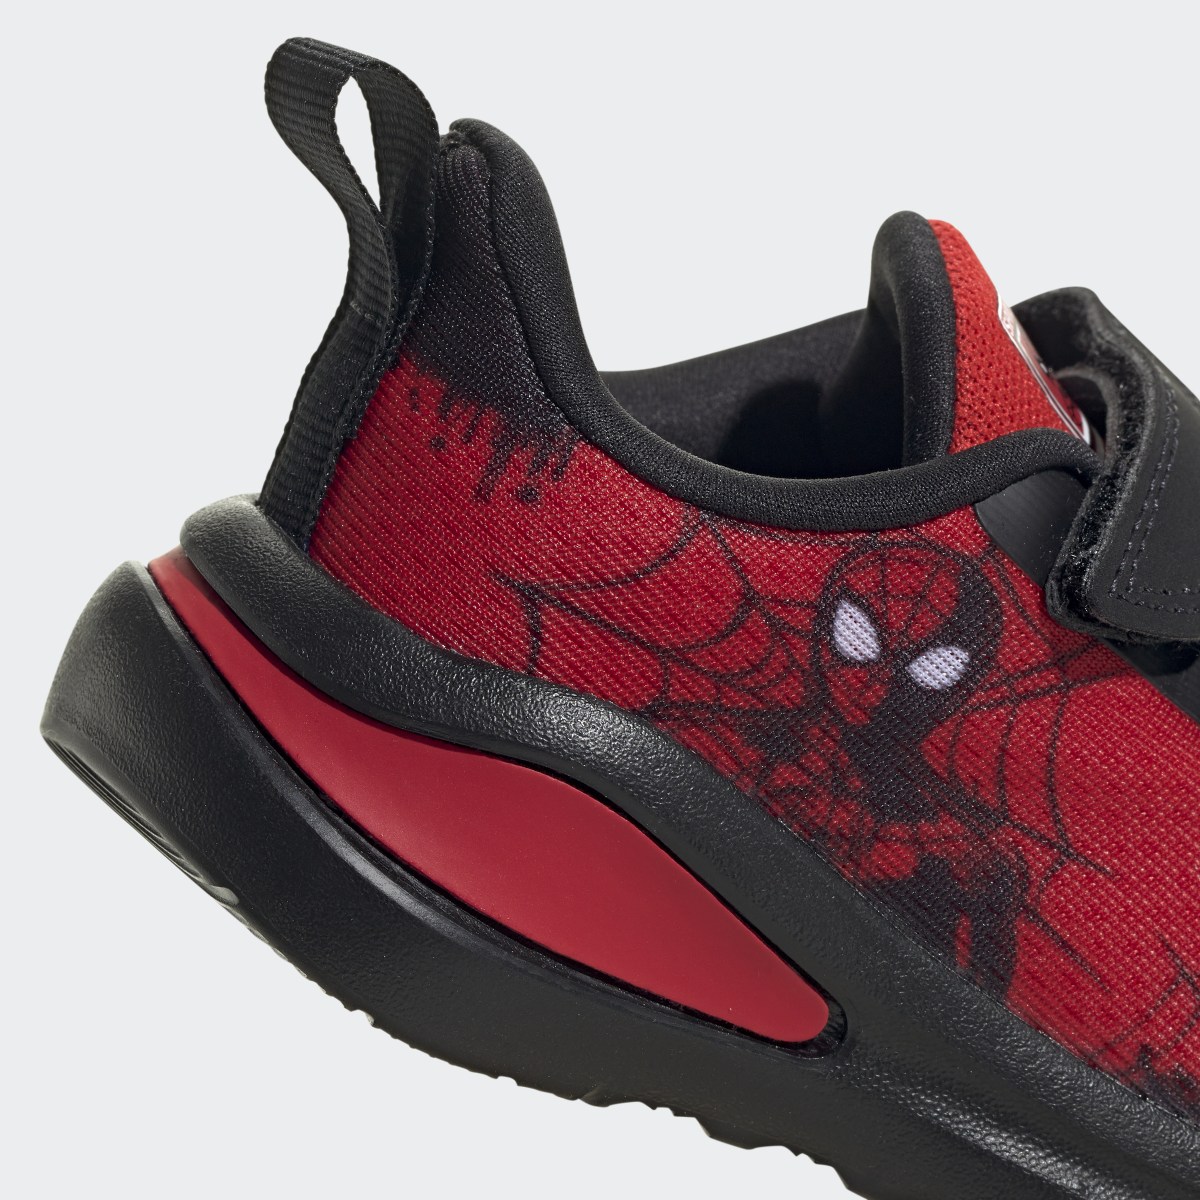 Adidas Sapatilhas Fortarun Spider-Man adidas x Marvel. 10